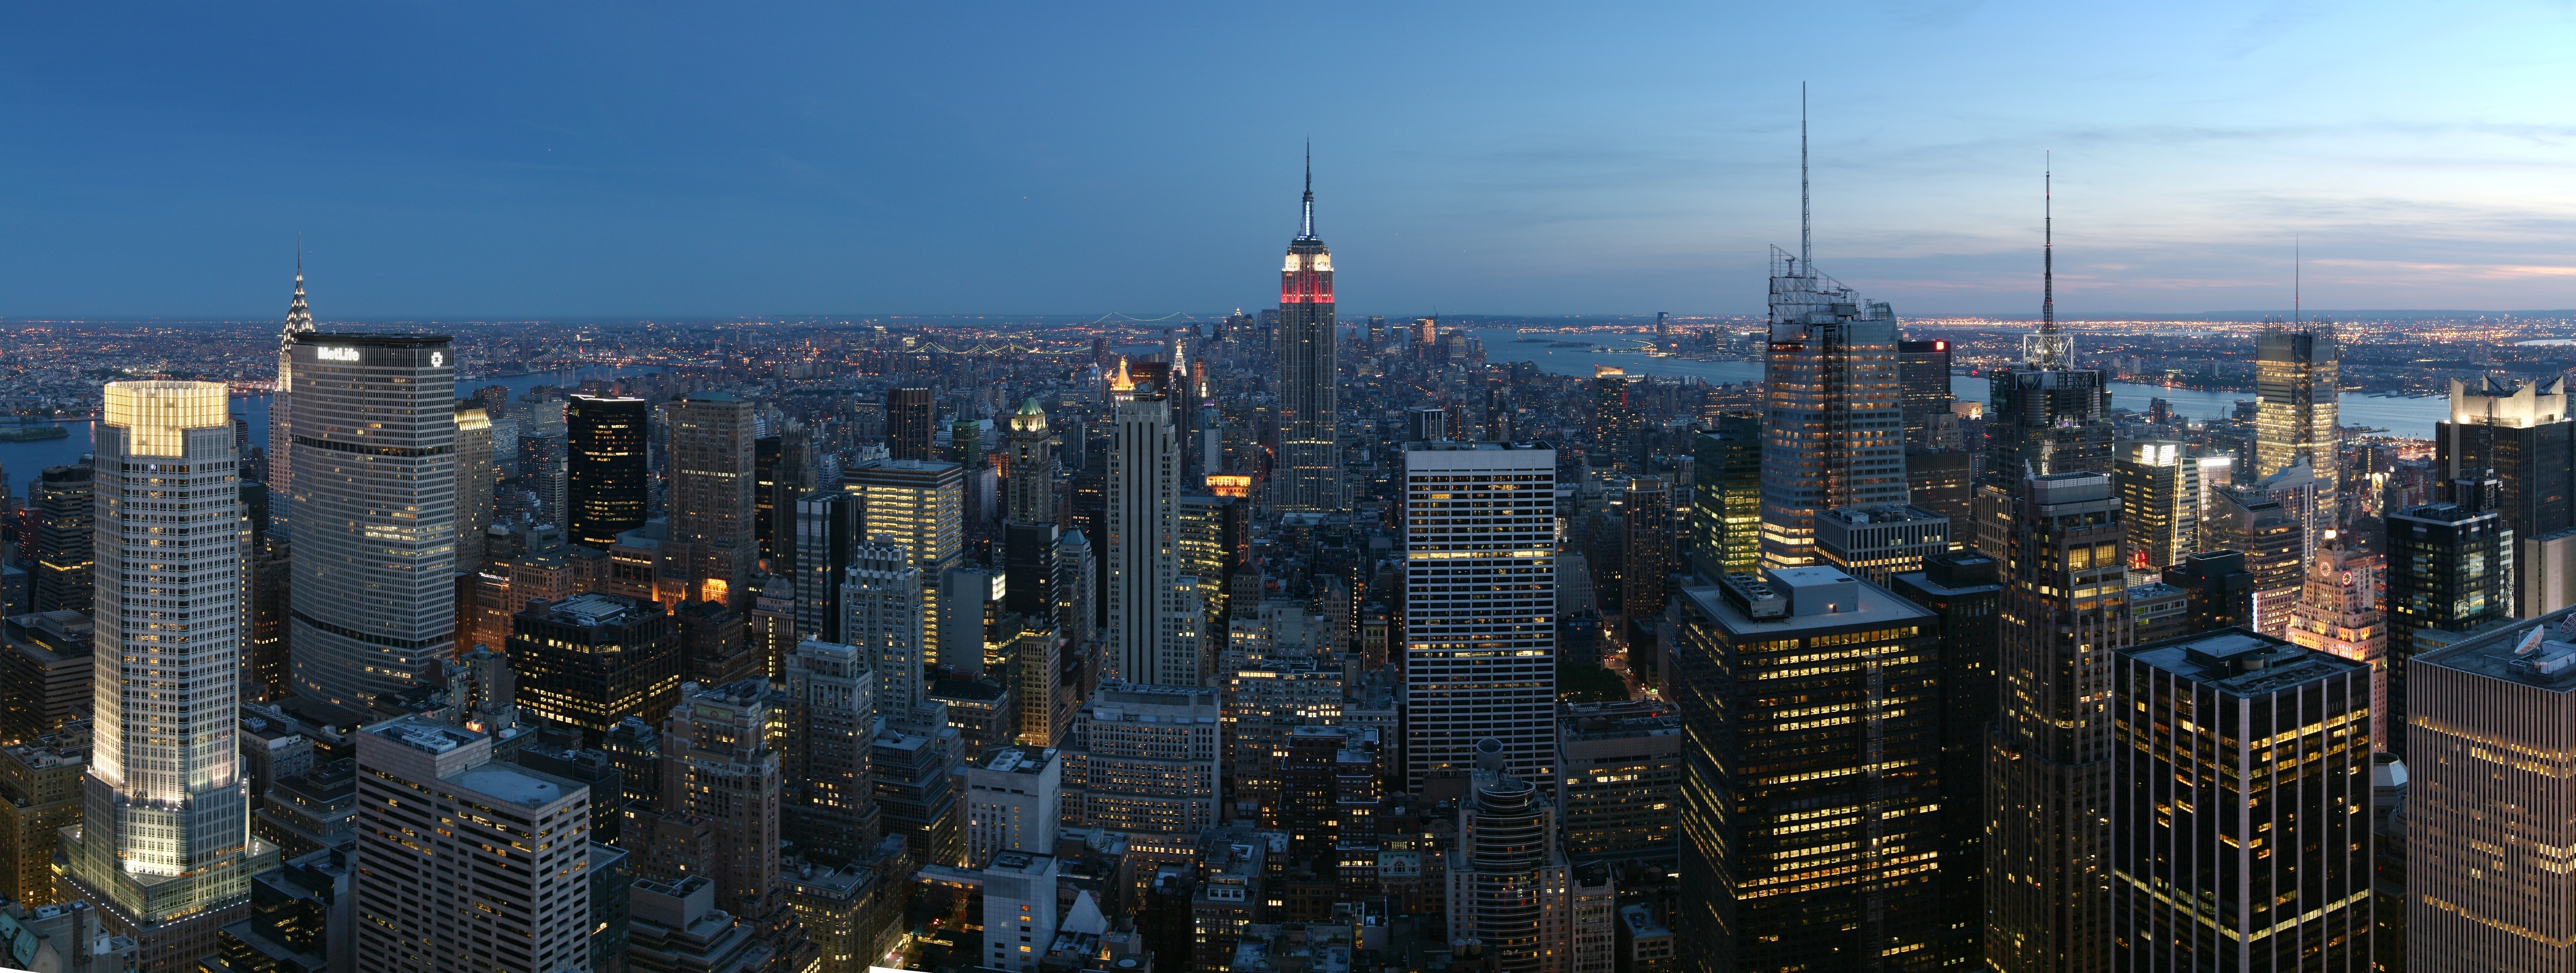 4k Wallpaper City New York Empire State Building